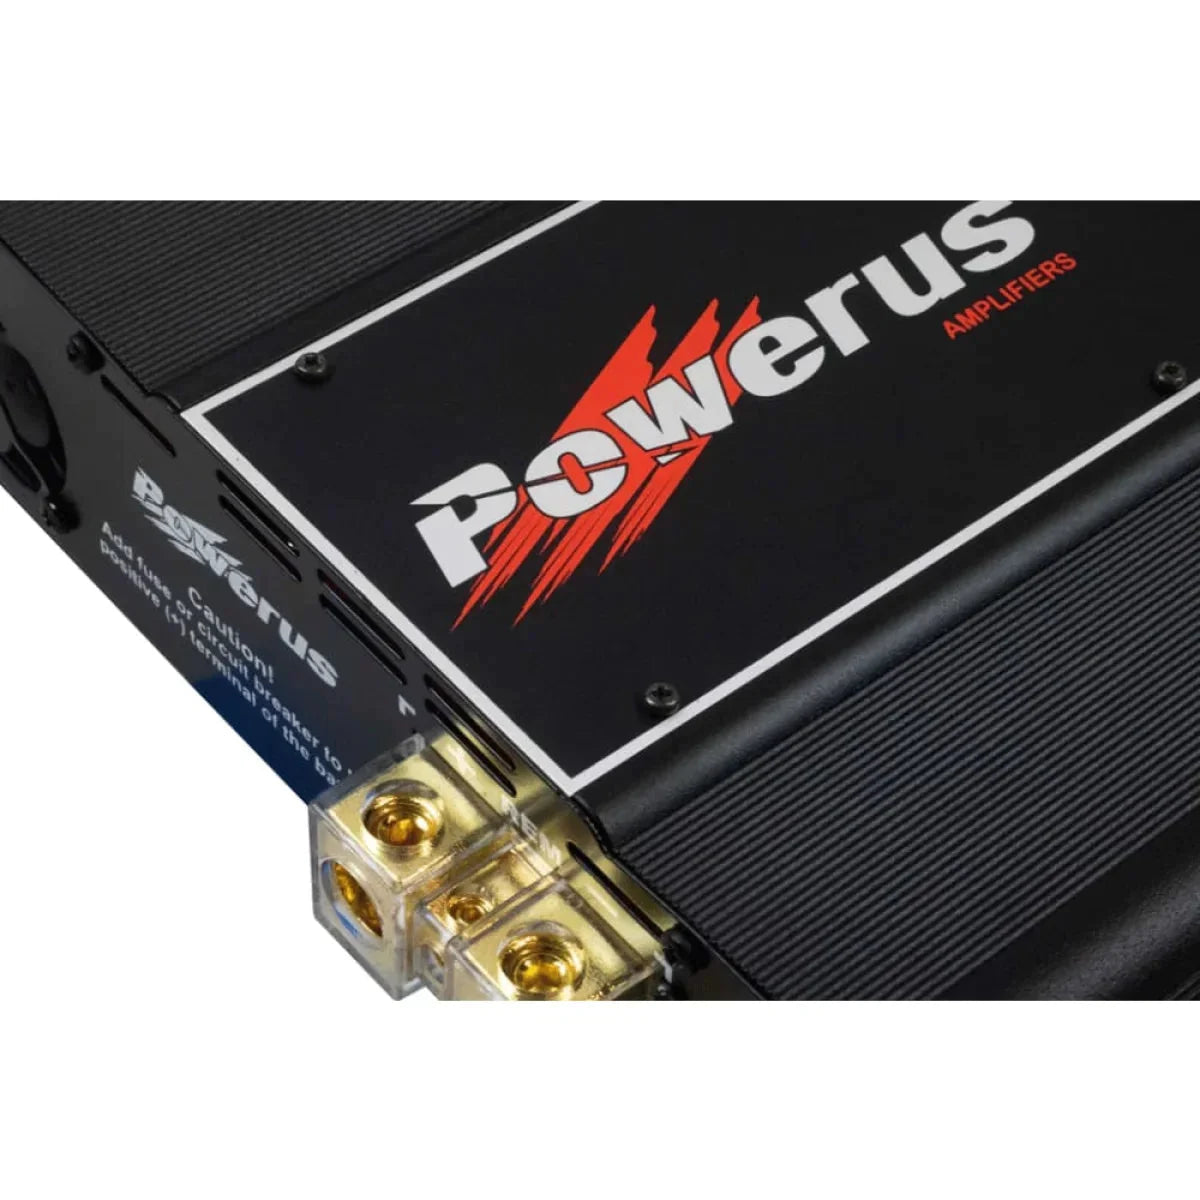 Powerus-PW8000-1-Kanal Verstärker-Masori.de